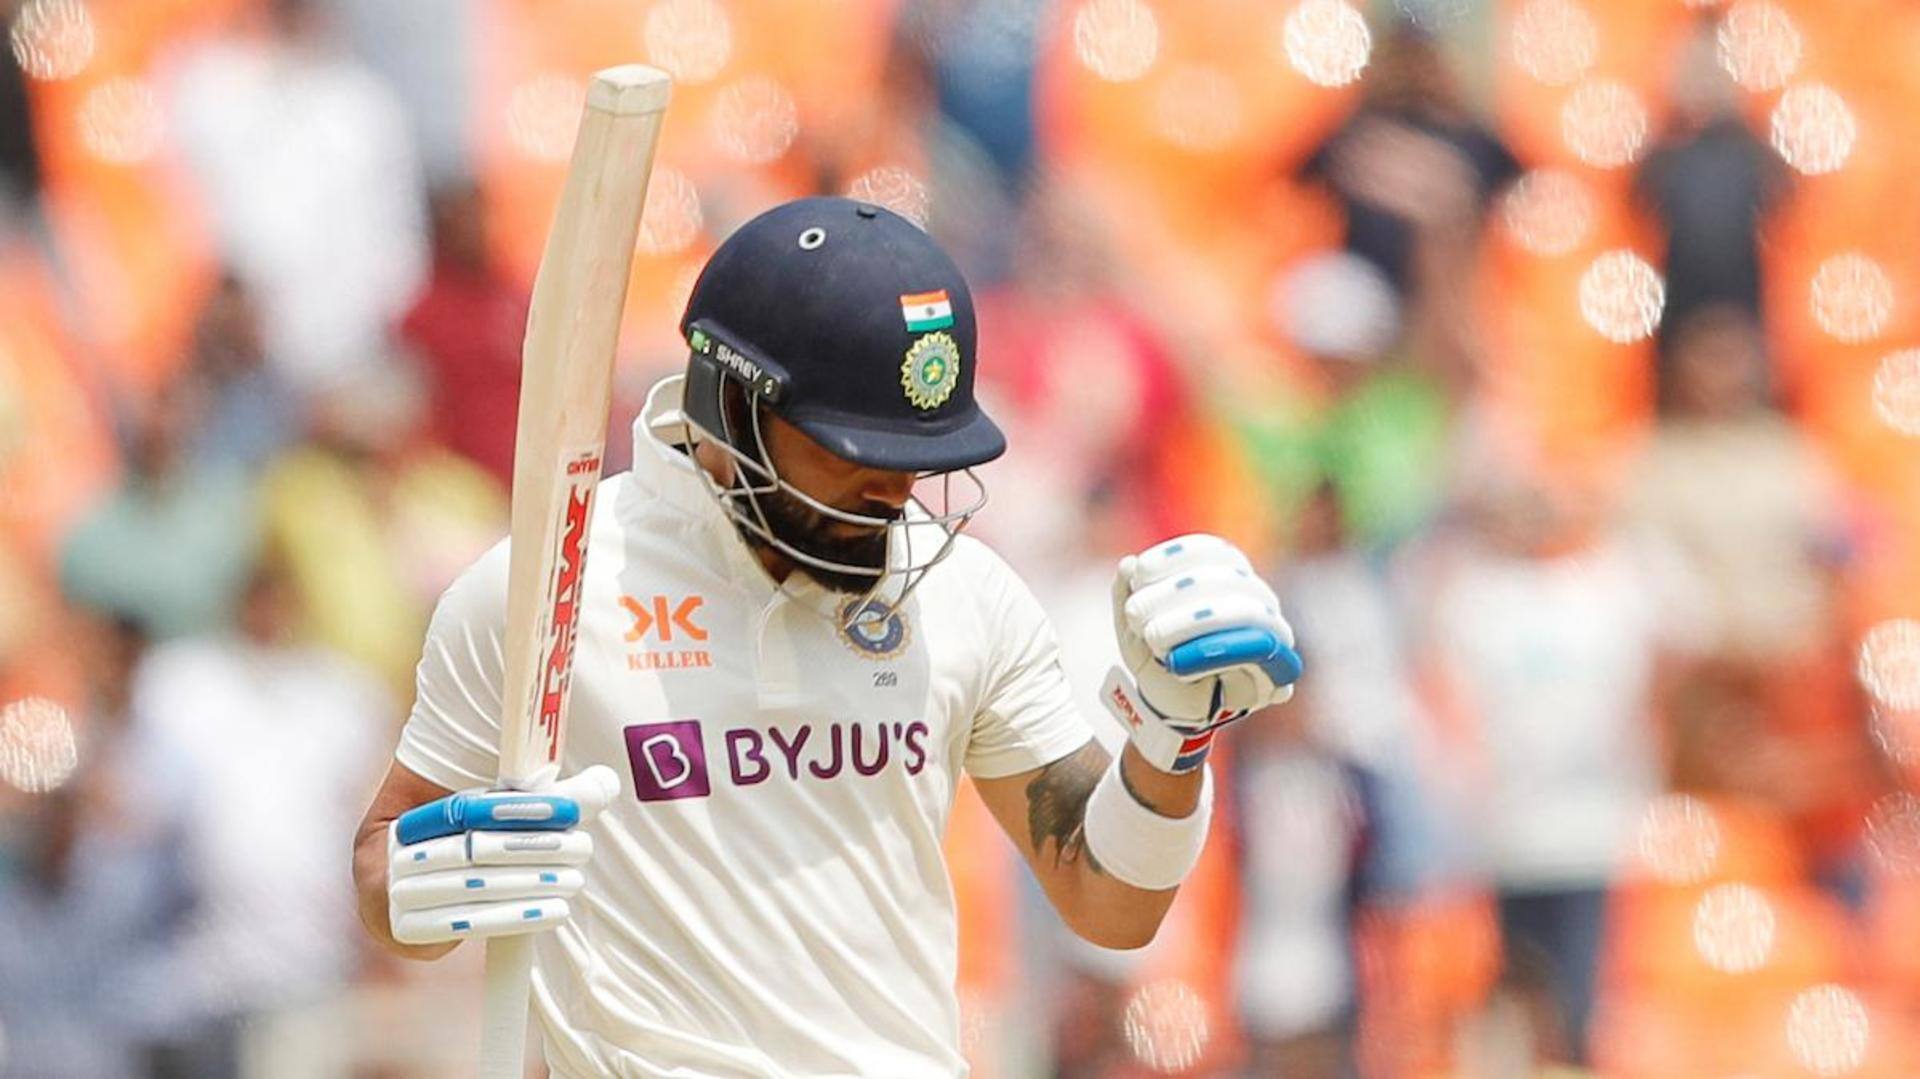 Virat Kohli smashes a Test century after 41 innings: Stats